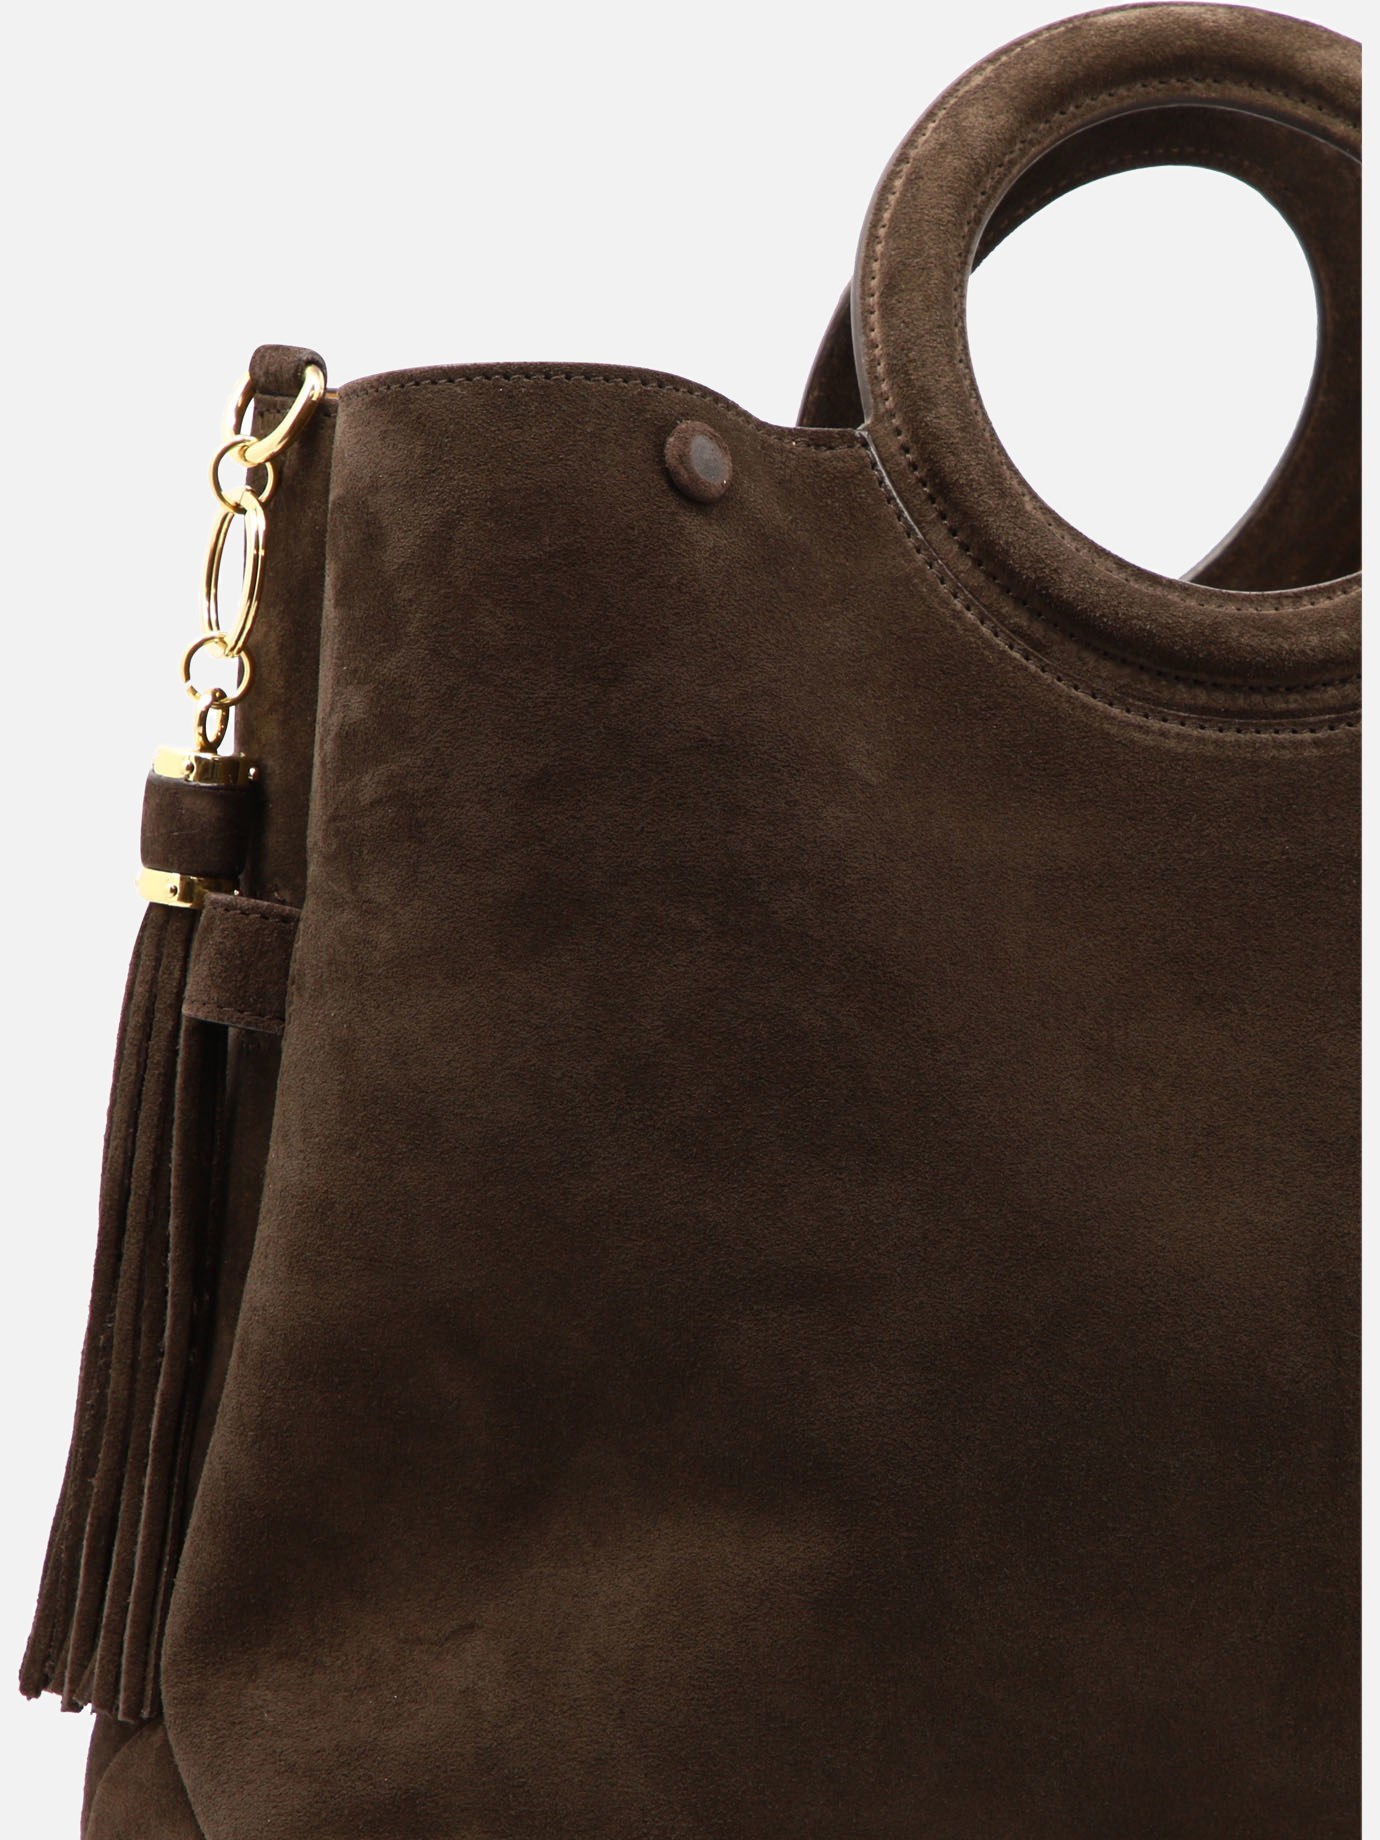  Jennifer  handbag by Amma Mode